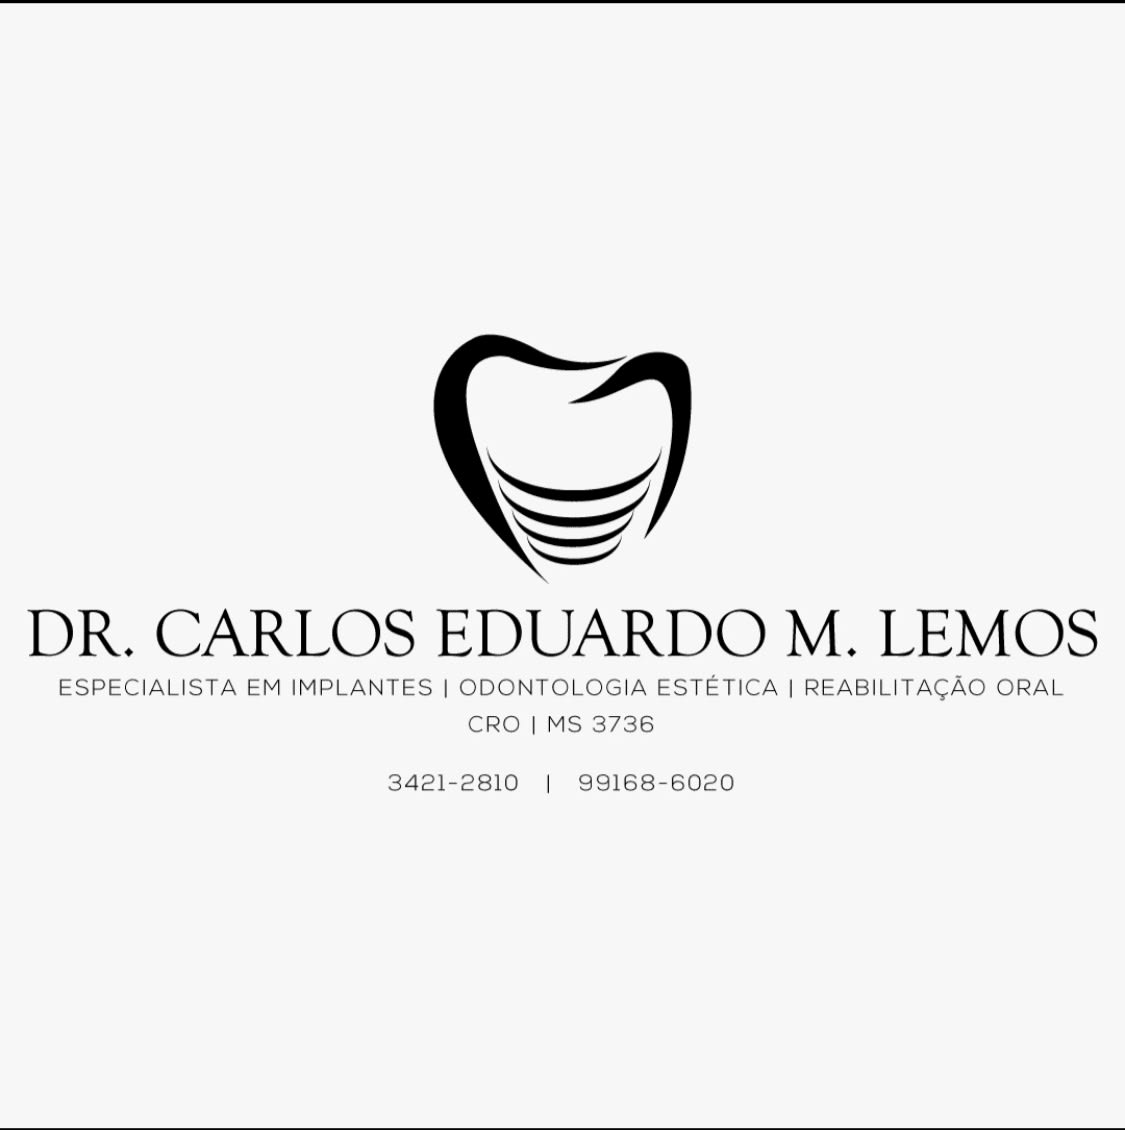 Dr. Carlos Eduardo M. Lemos